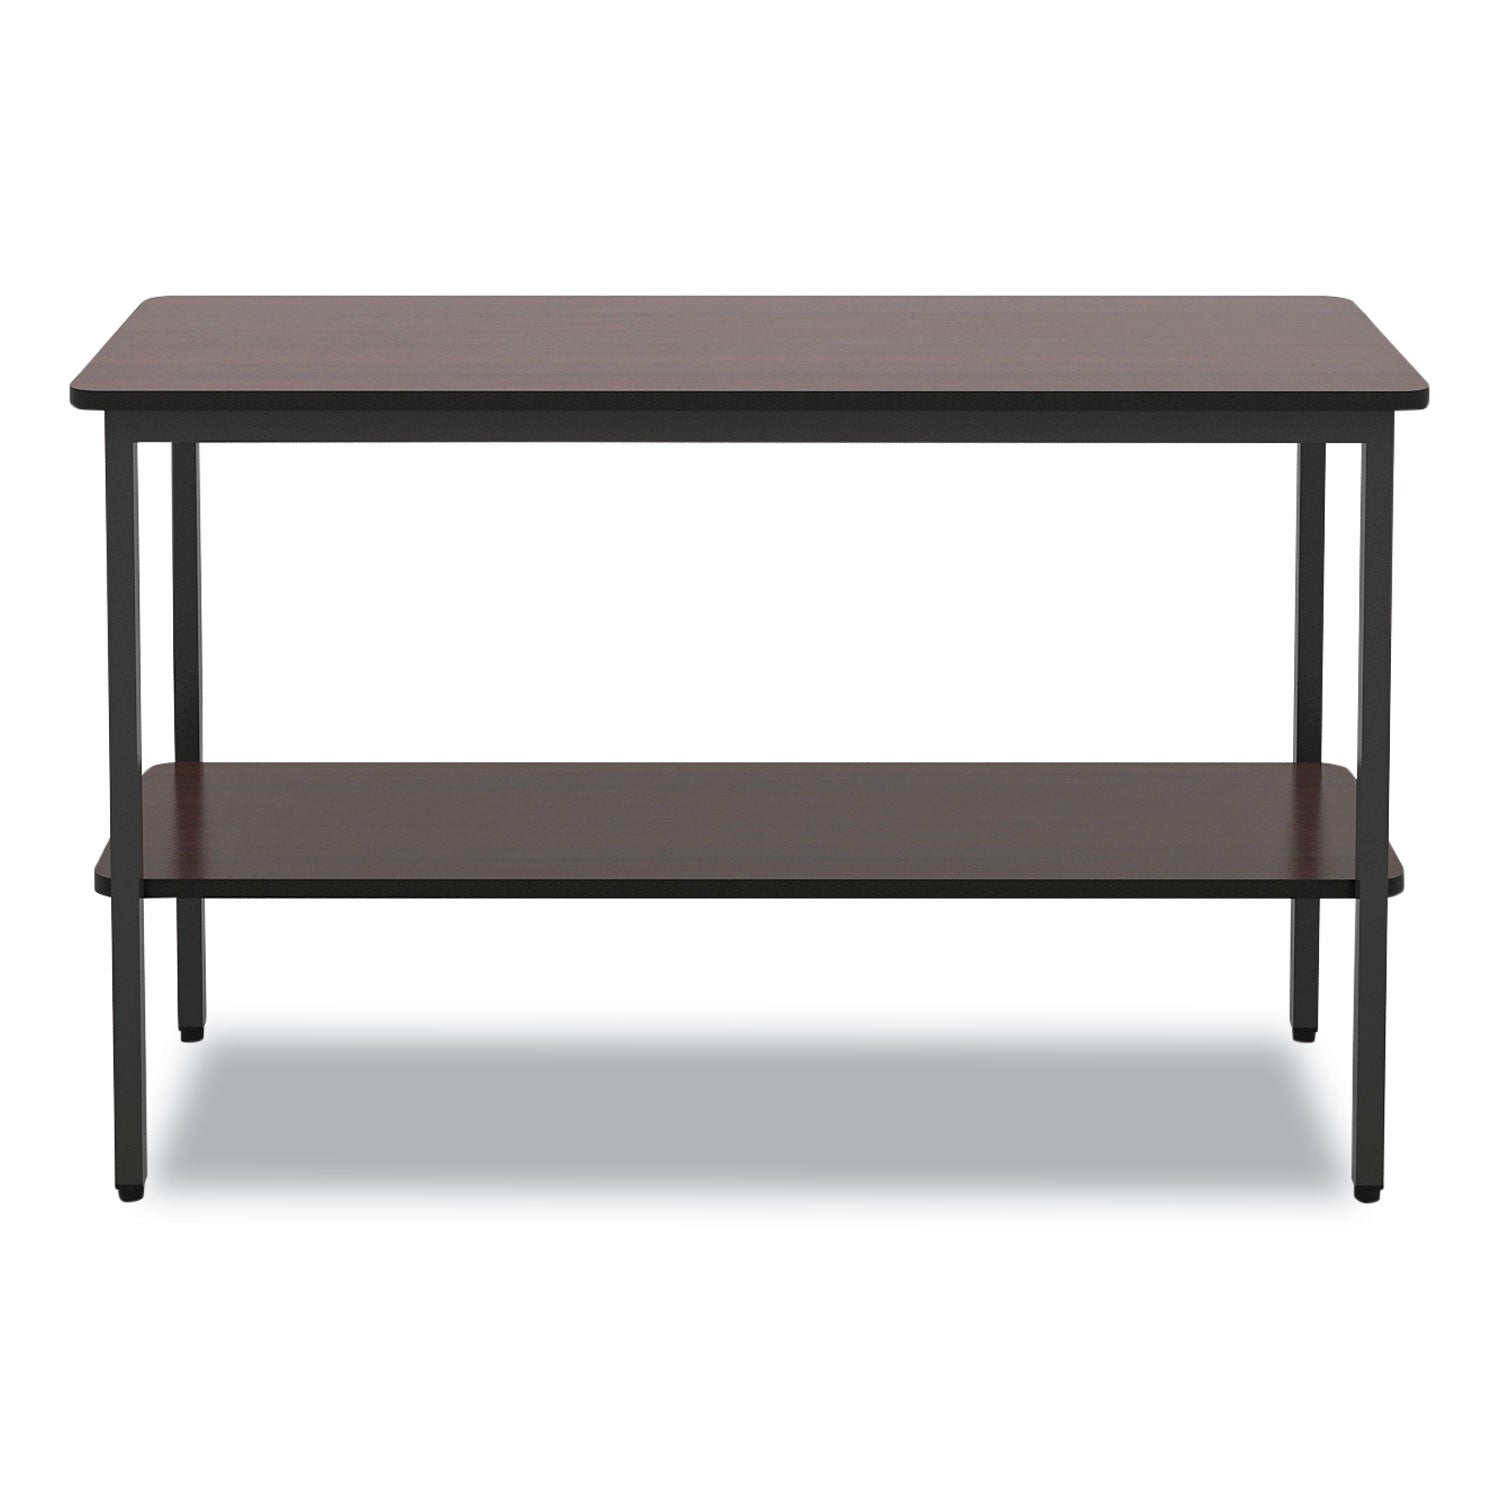 officeworks-one-shelf-utility-table-rectangular-4725-x-177-x-295-walnut-top-black-base-legs_ice69124 - 2